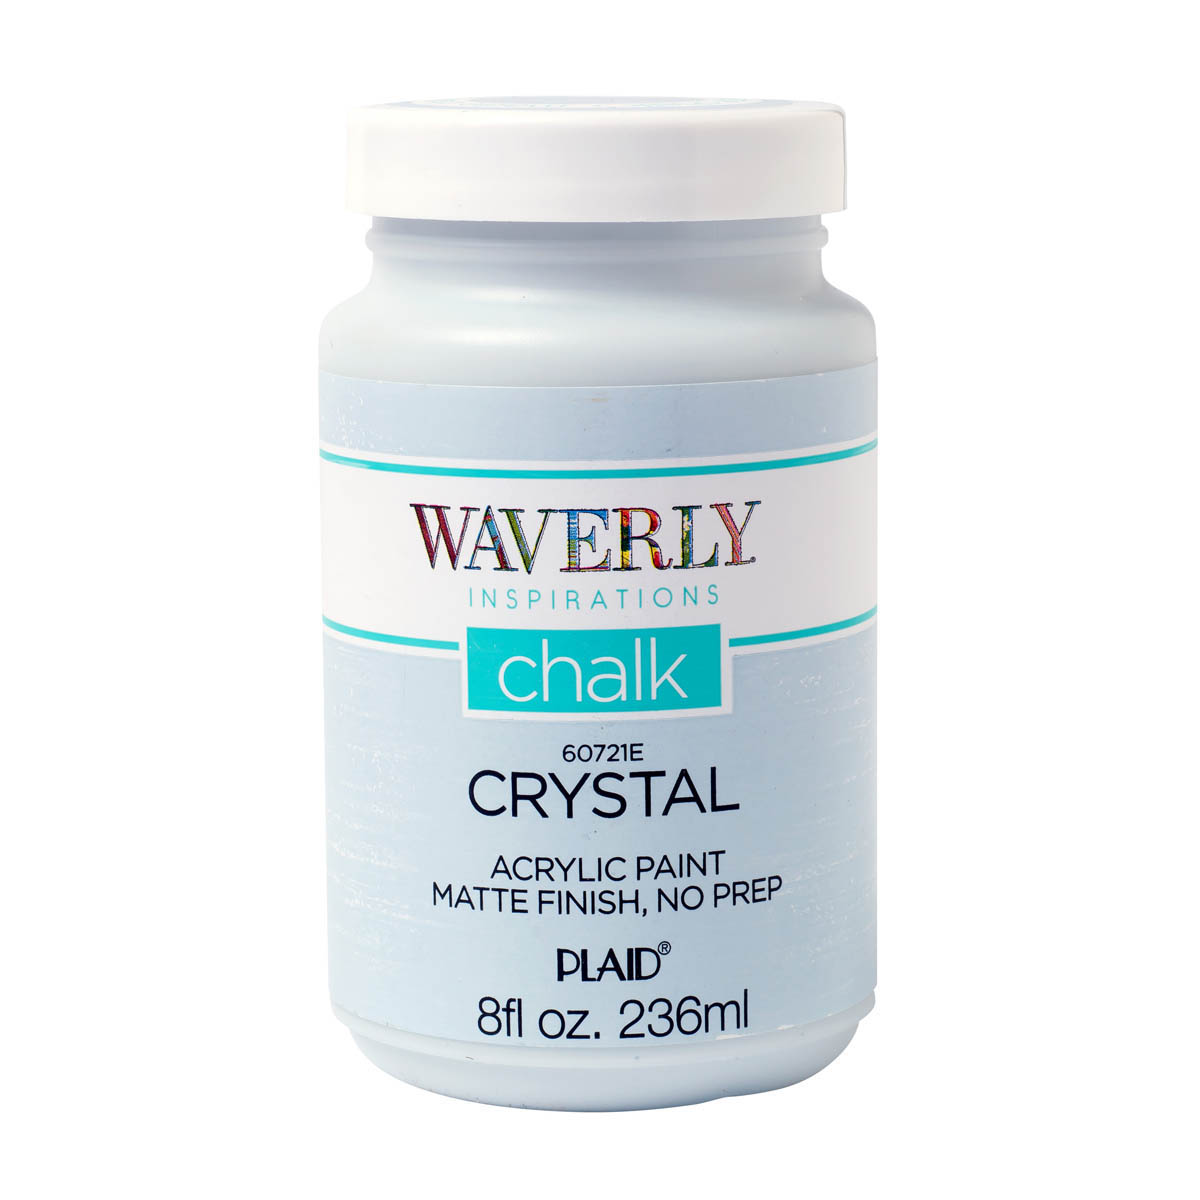 Shop Plaid Waverly ® Inspirations Chalk Acrylic Paint - Crystal, 8